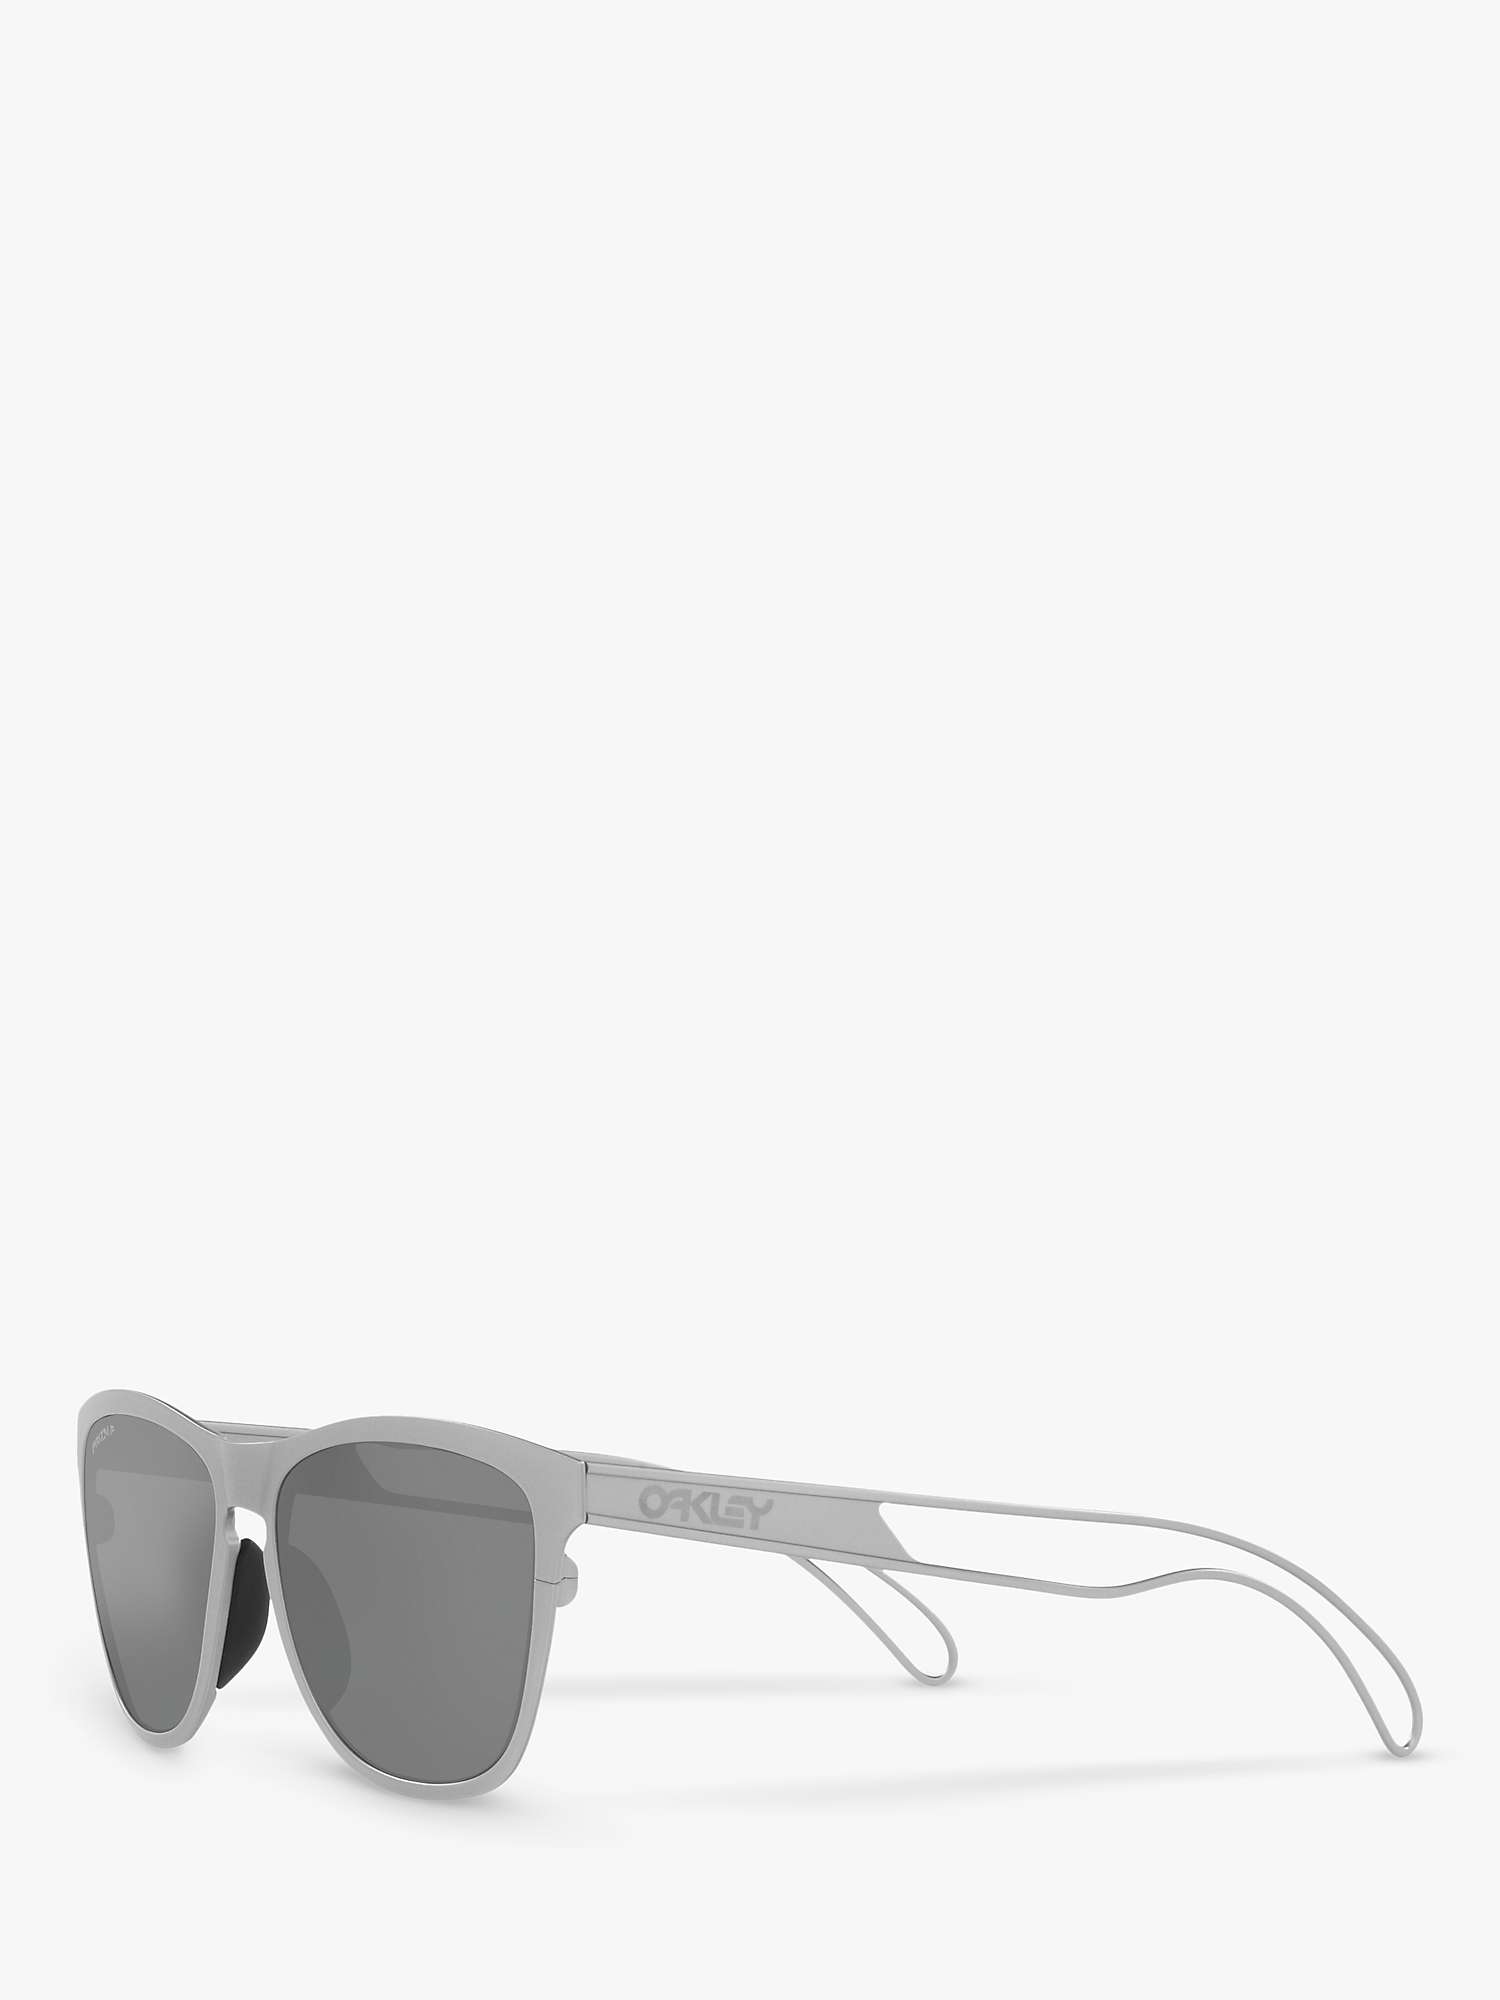 Buy Oakley OO60446 Men's Frogskins Sunglasses, Raw Titanium Online at johnlewis.com